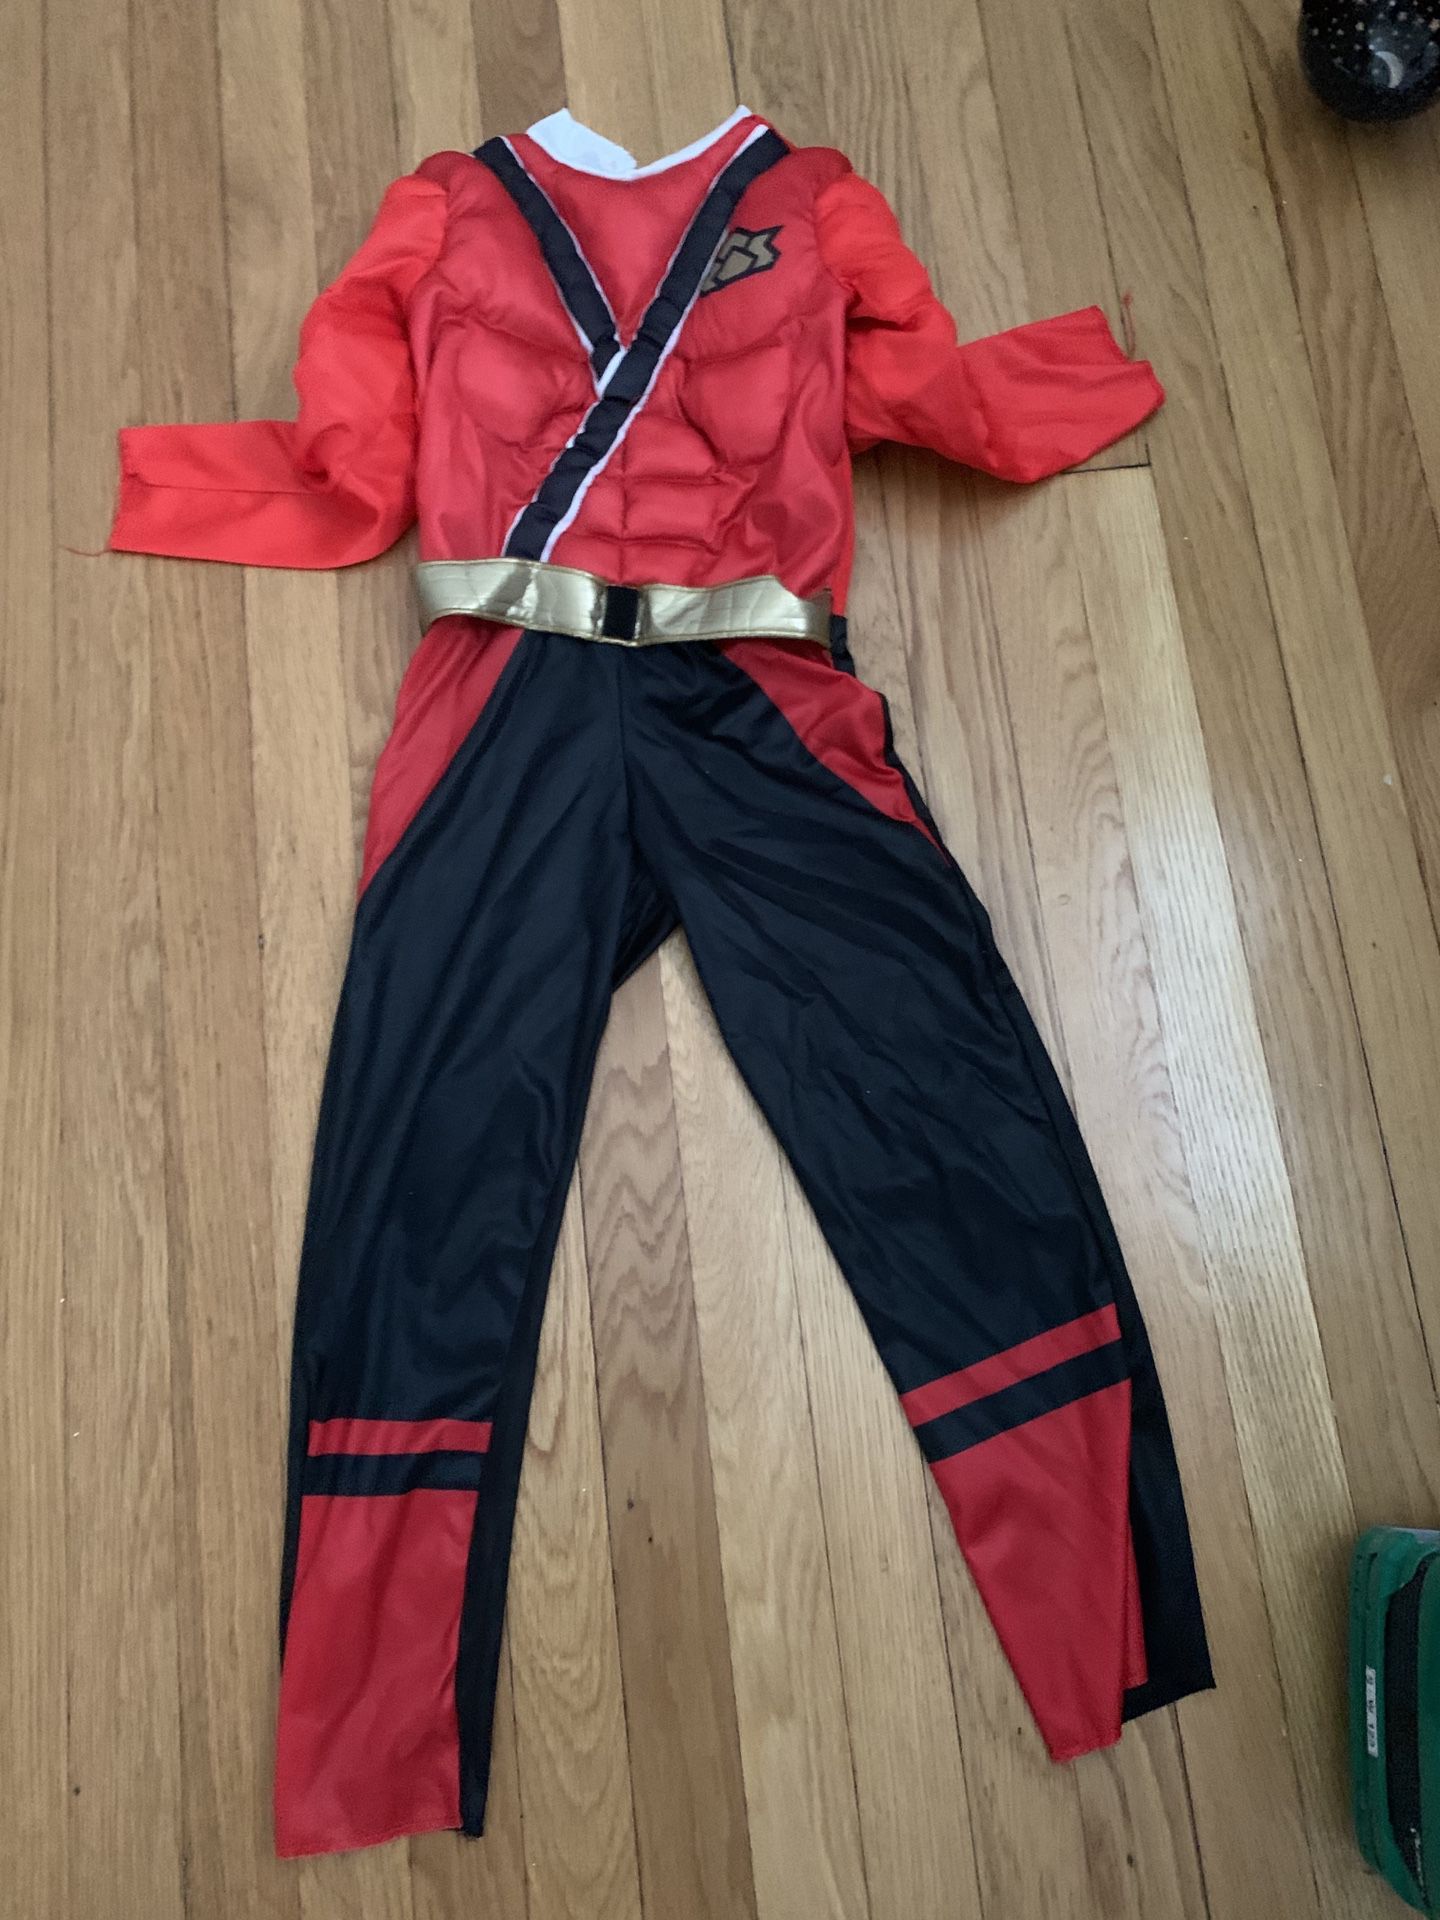 Free! Kids Power Ranger Halloween Costume, size small (4-6)